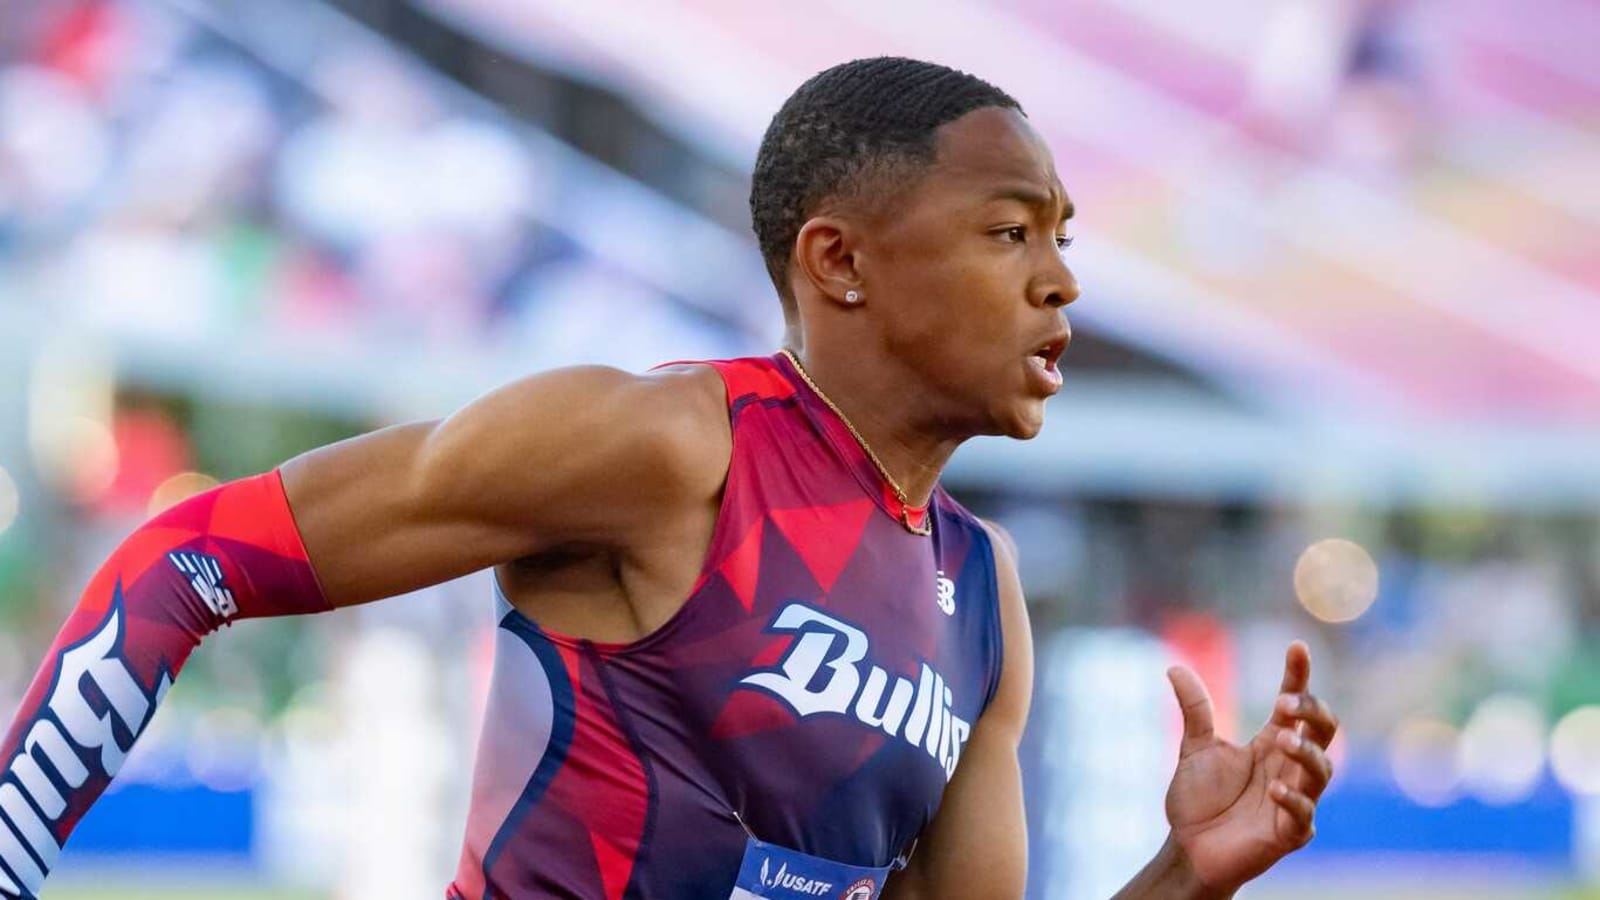 16-year-old Quincy Wilson can still qualify for Paris Olympics | Yardbarker